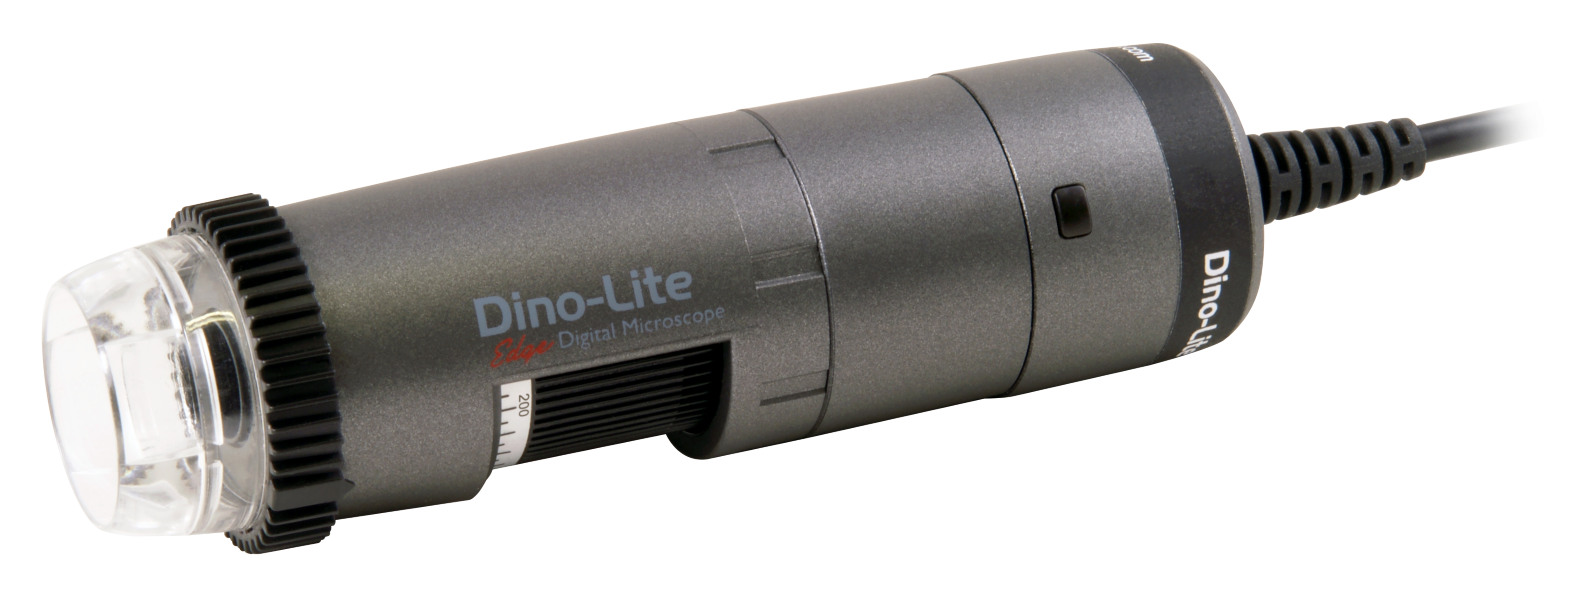 Dino-Lite Edge AF4915ZTL USB Digital Microscope